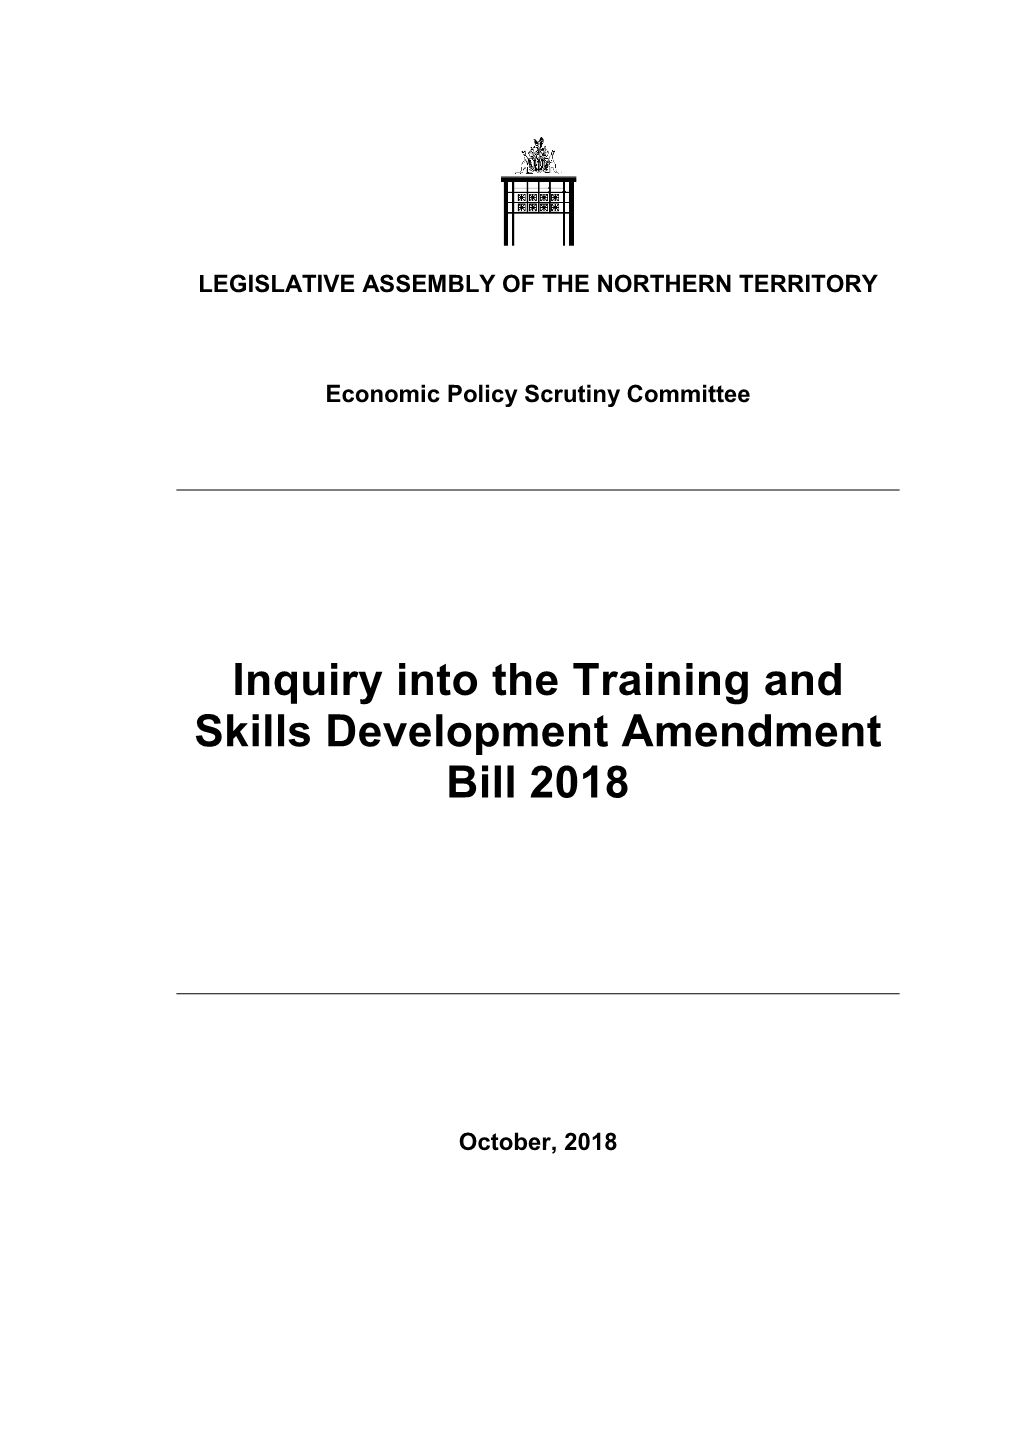 Inquiry Into the Training and Skills Development Amendment Bill 2018